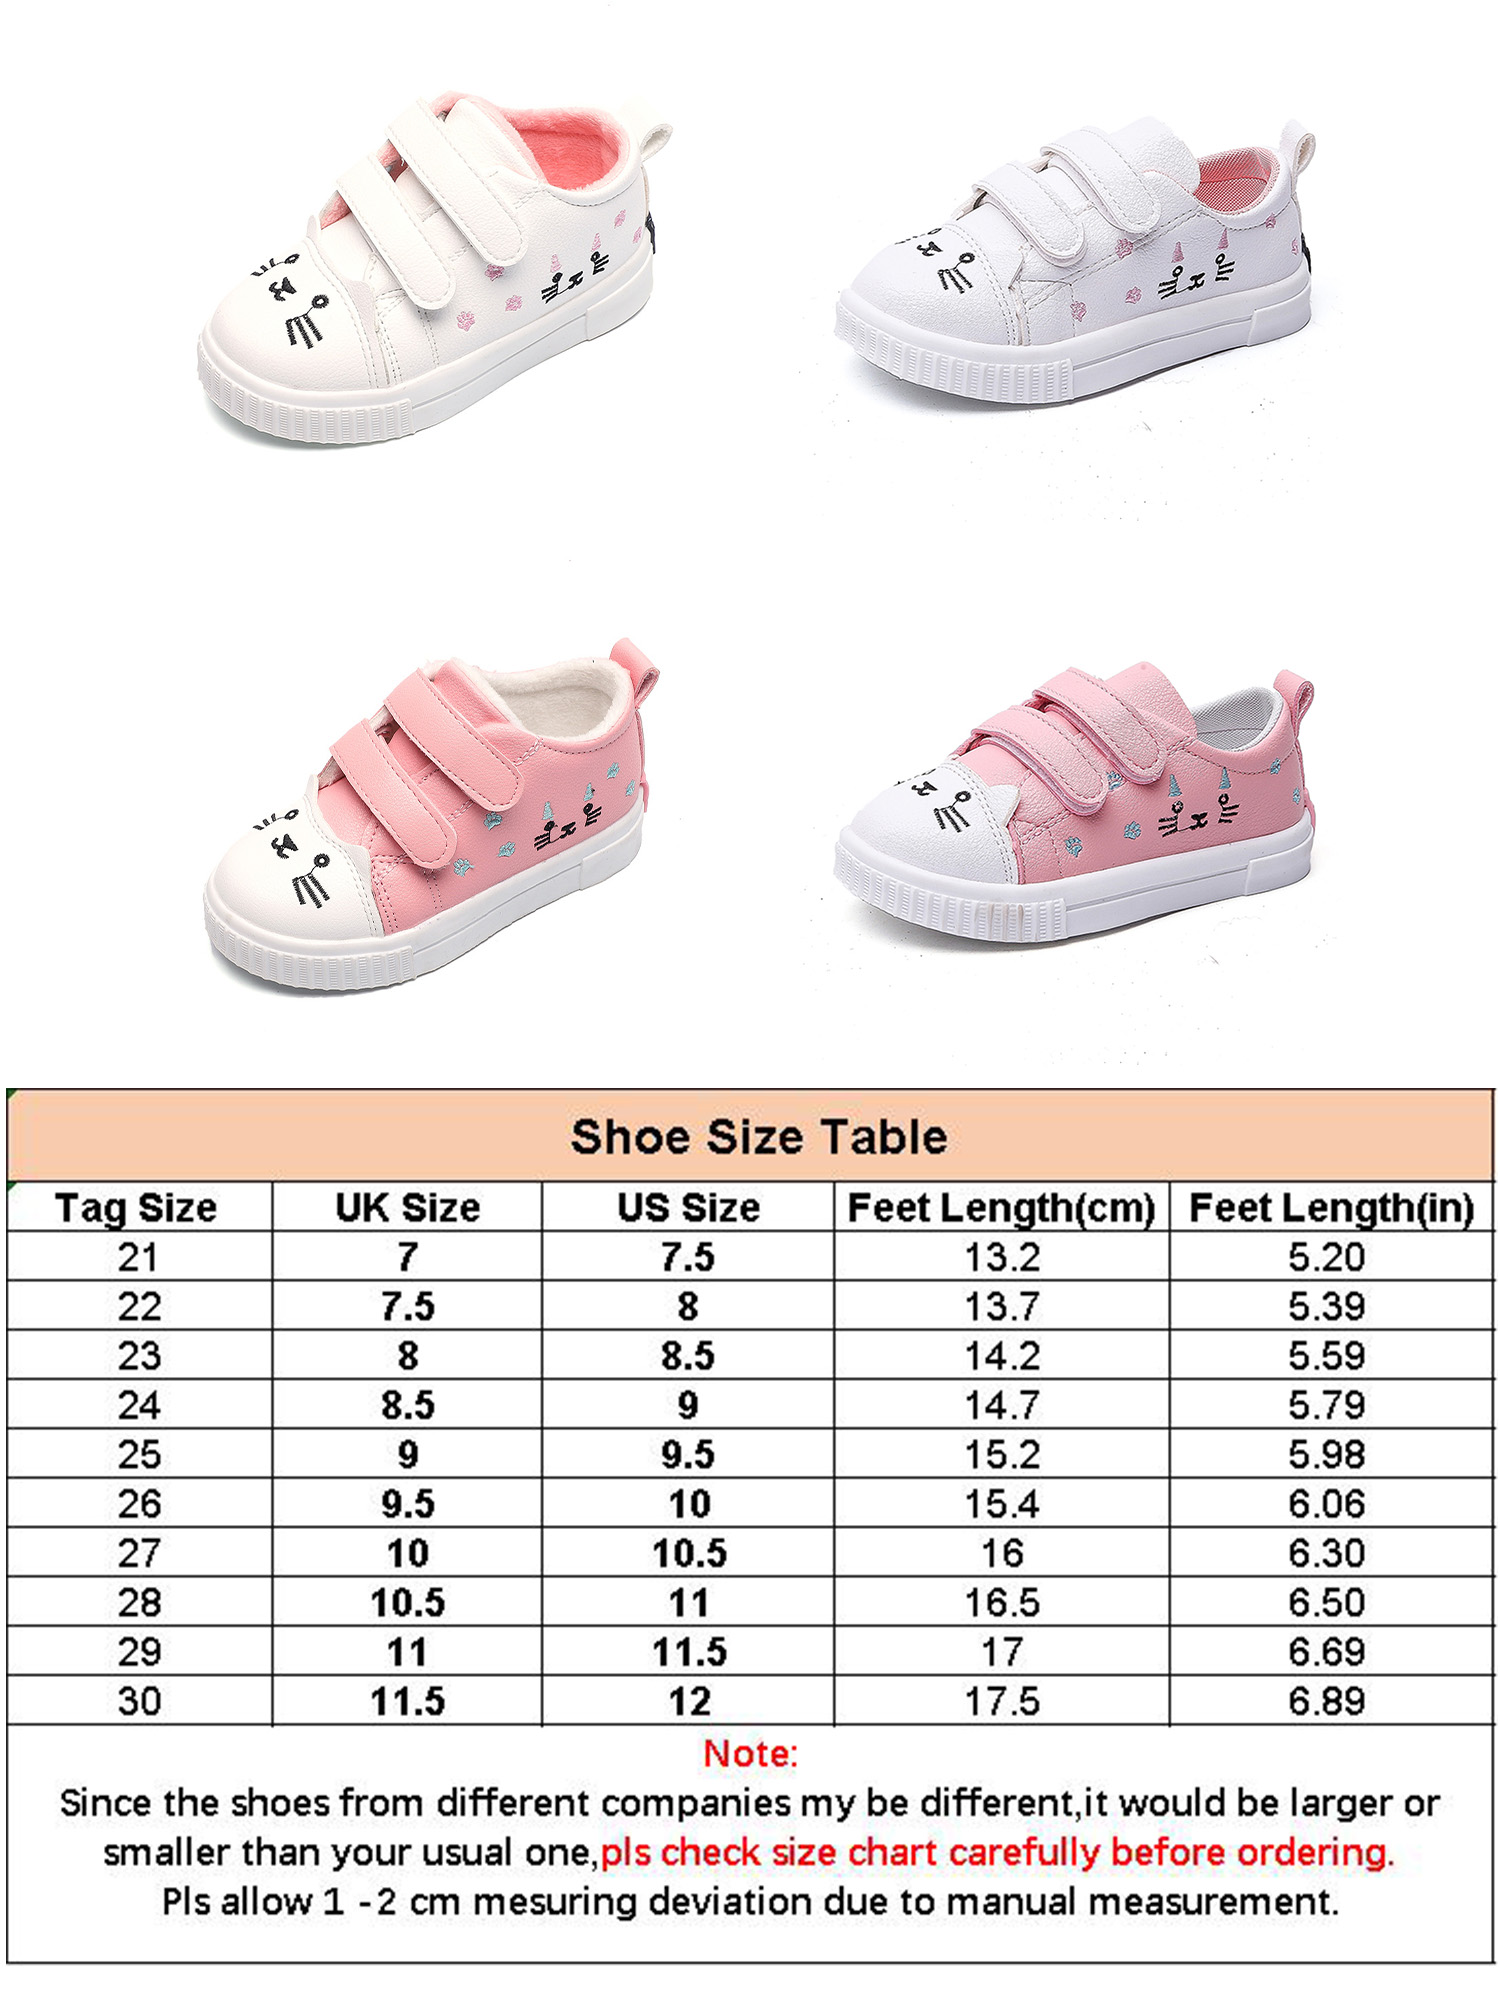 UKAP Boys Girls Anti-Slip Classic Low Top Slip On Sneakers Tennis Shoes Kids Flat Shoes - image 2 of 3